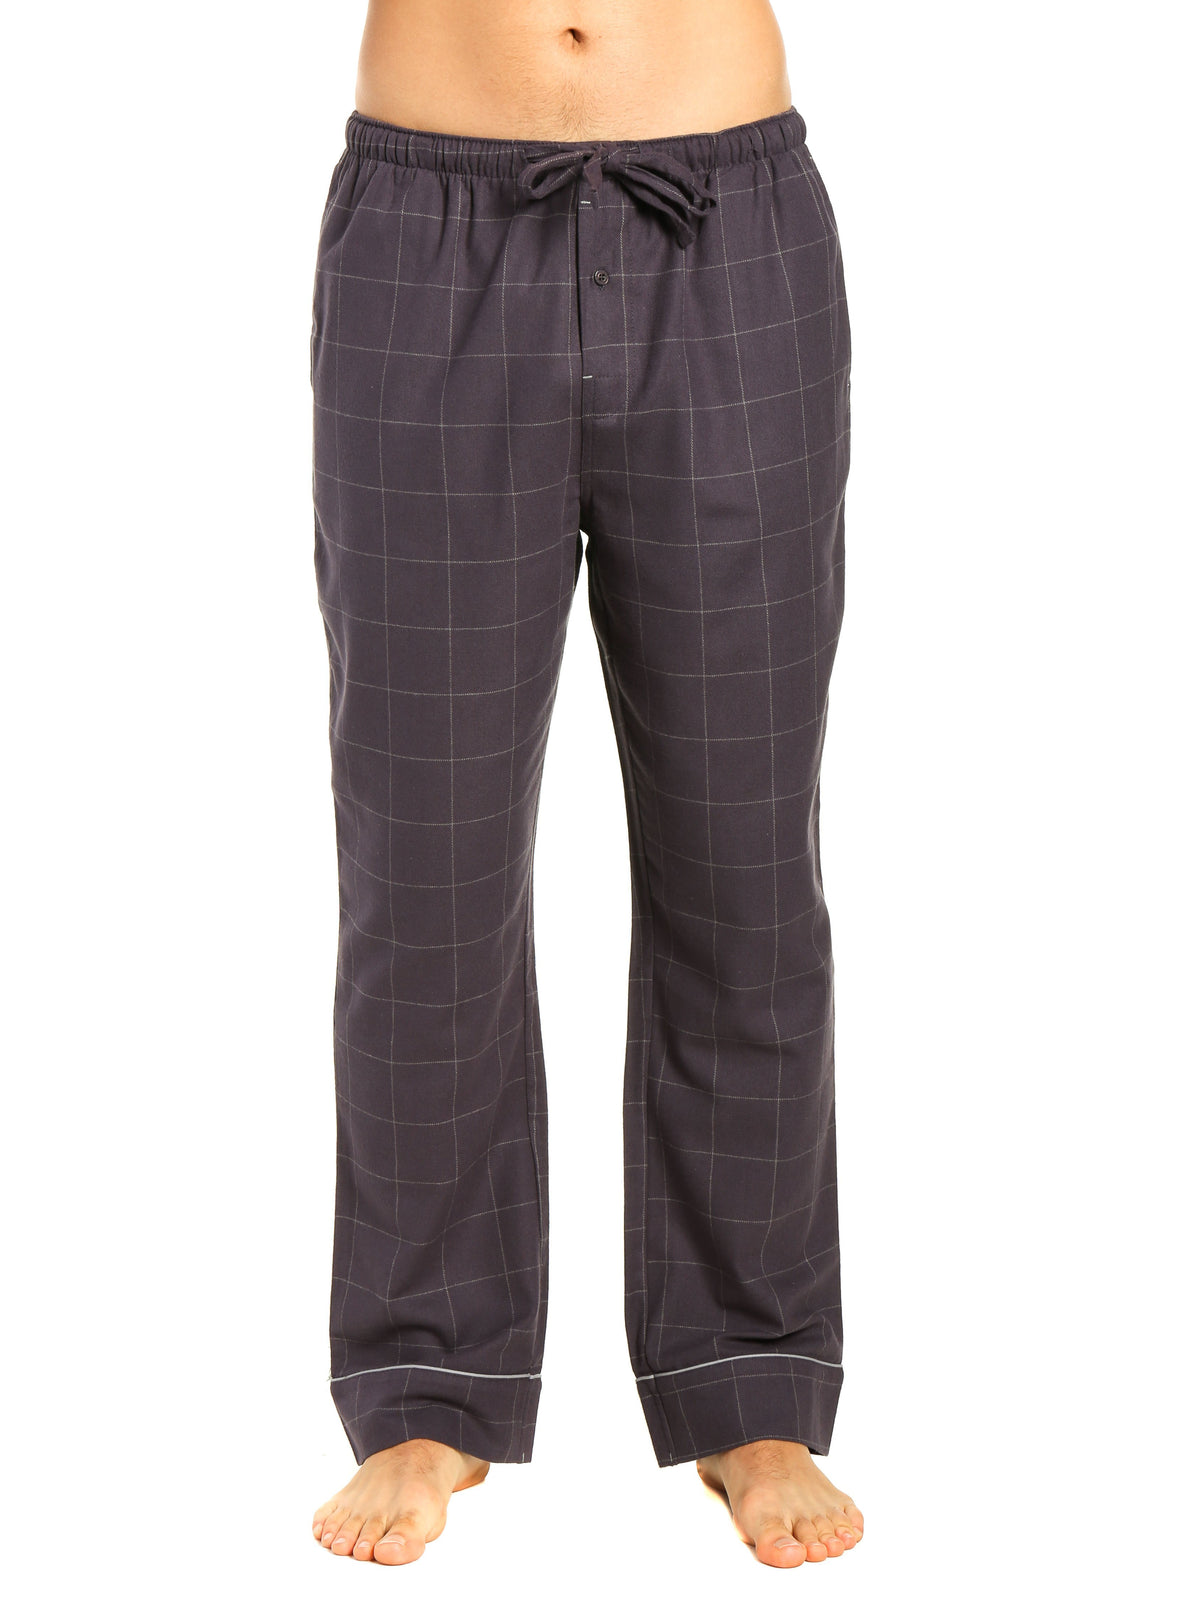 Mens Gingham 100% Cotton Flannel Lounge Pants - Windowpane Checks - Iron